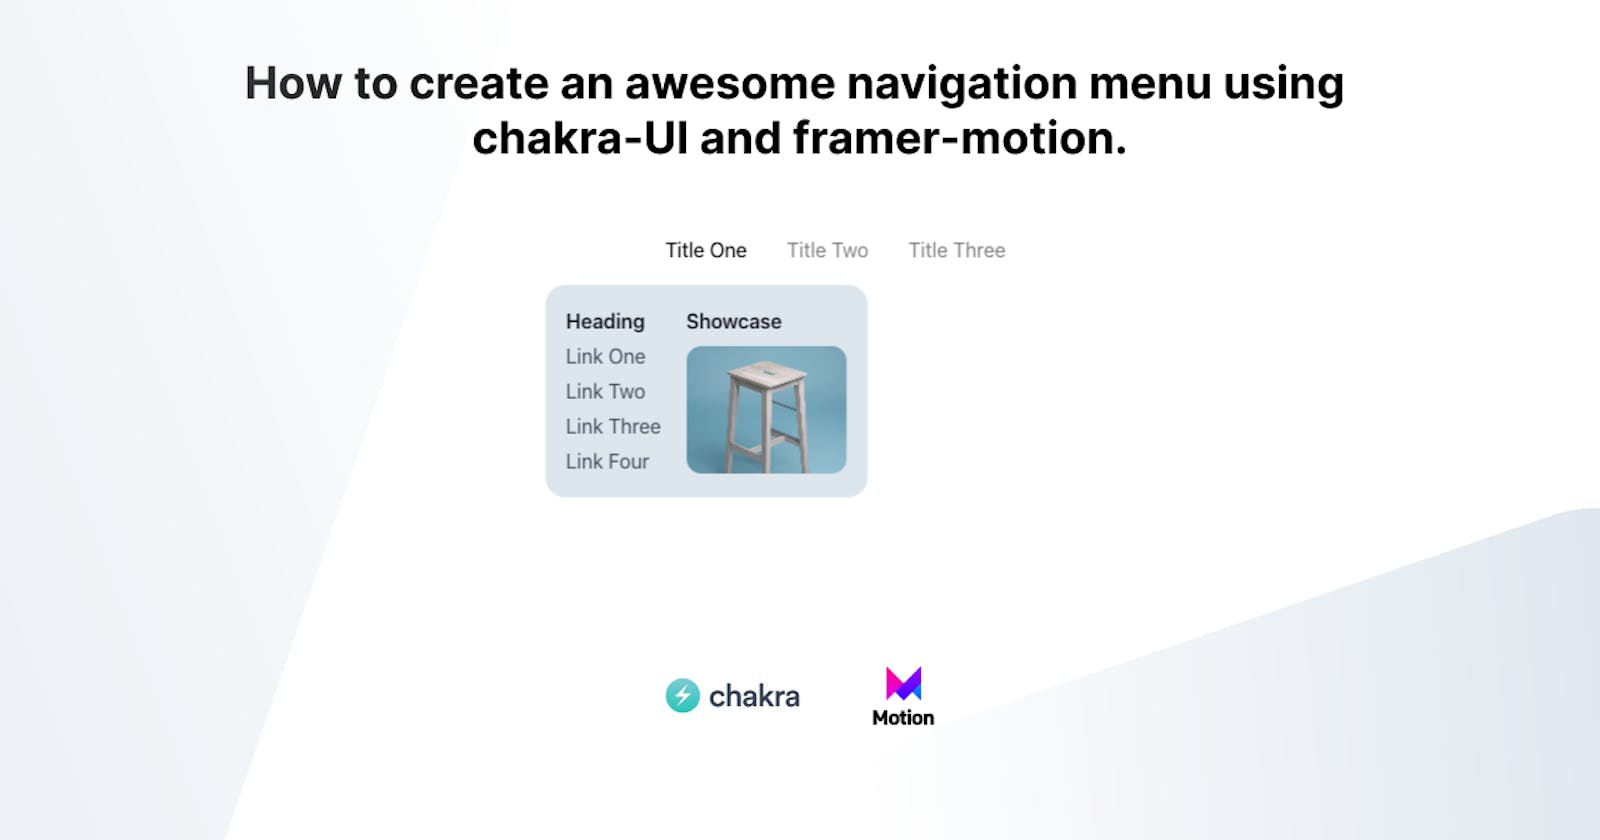 How to create an awesome navigation menu using chakra-UI and framer-motion.